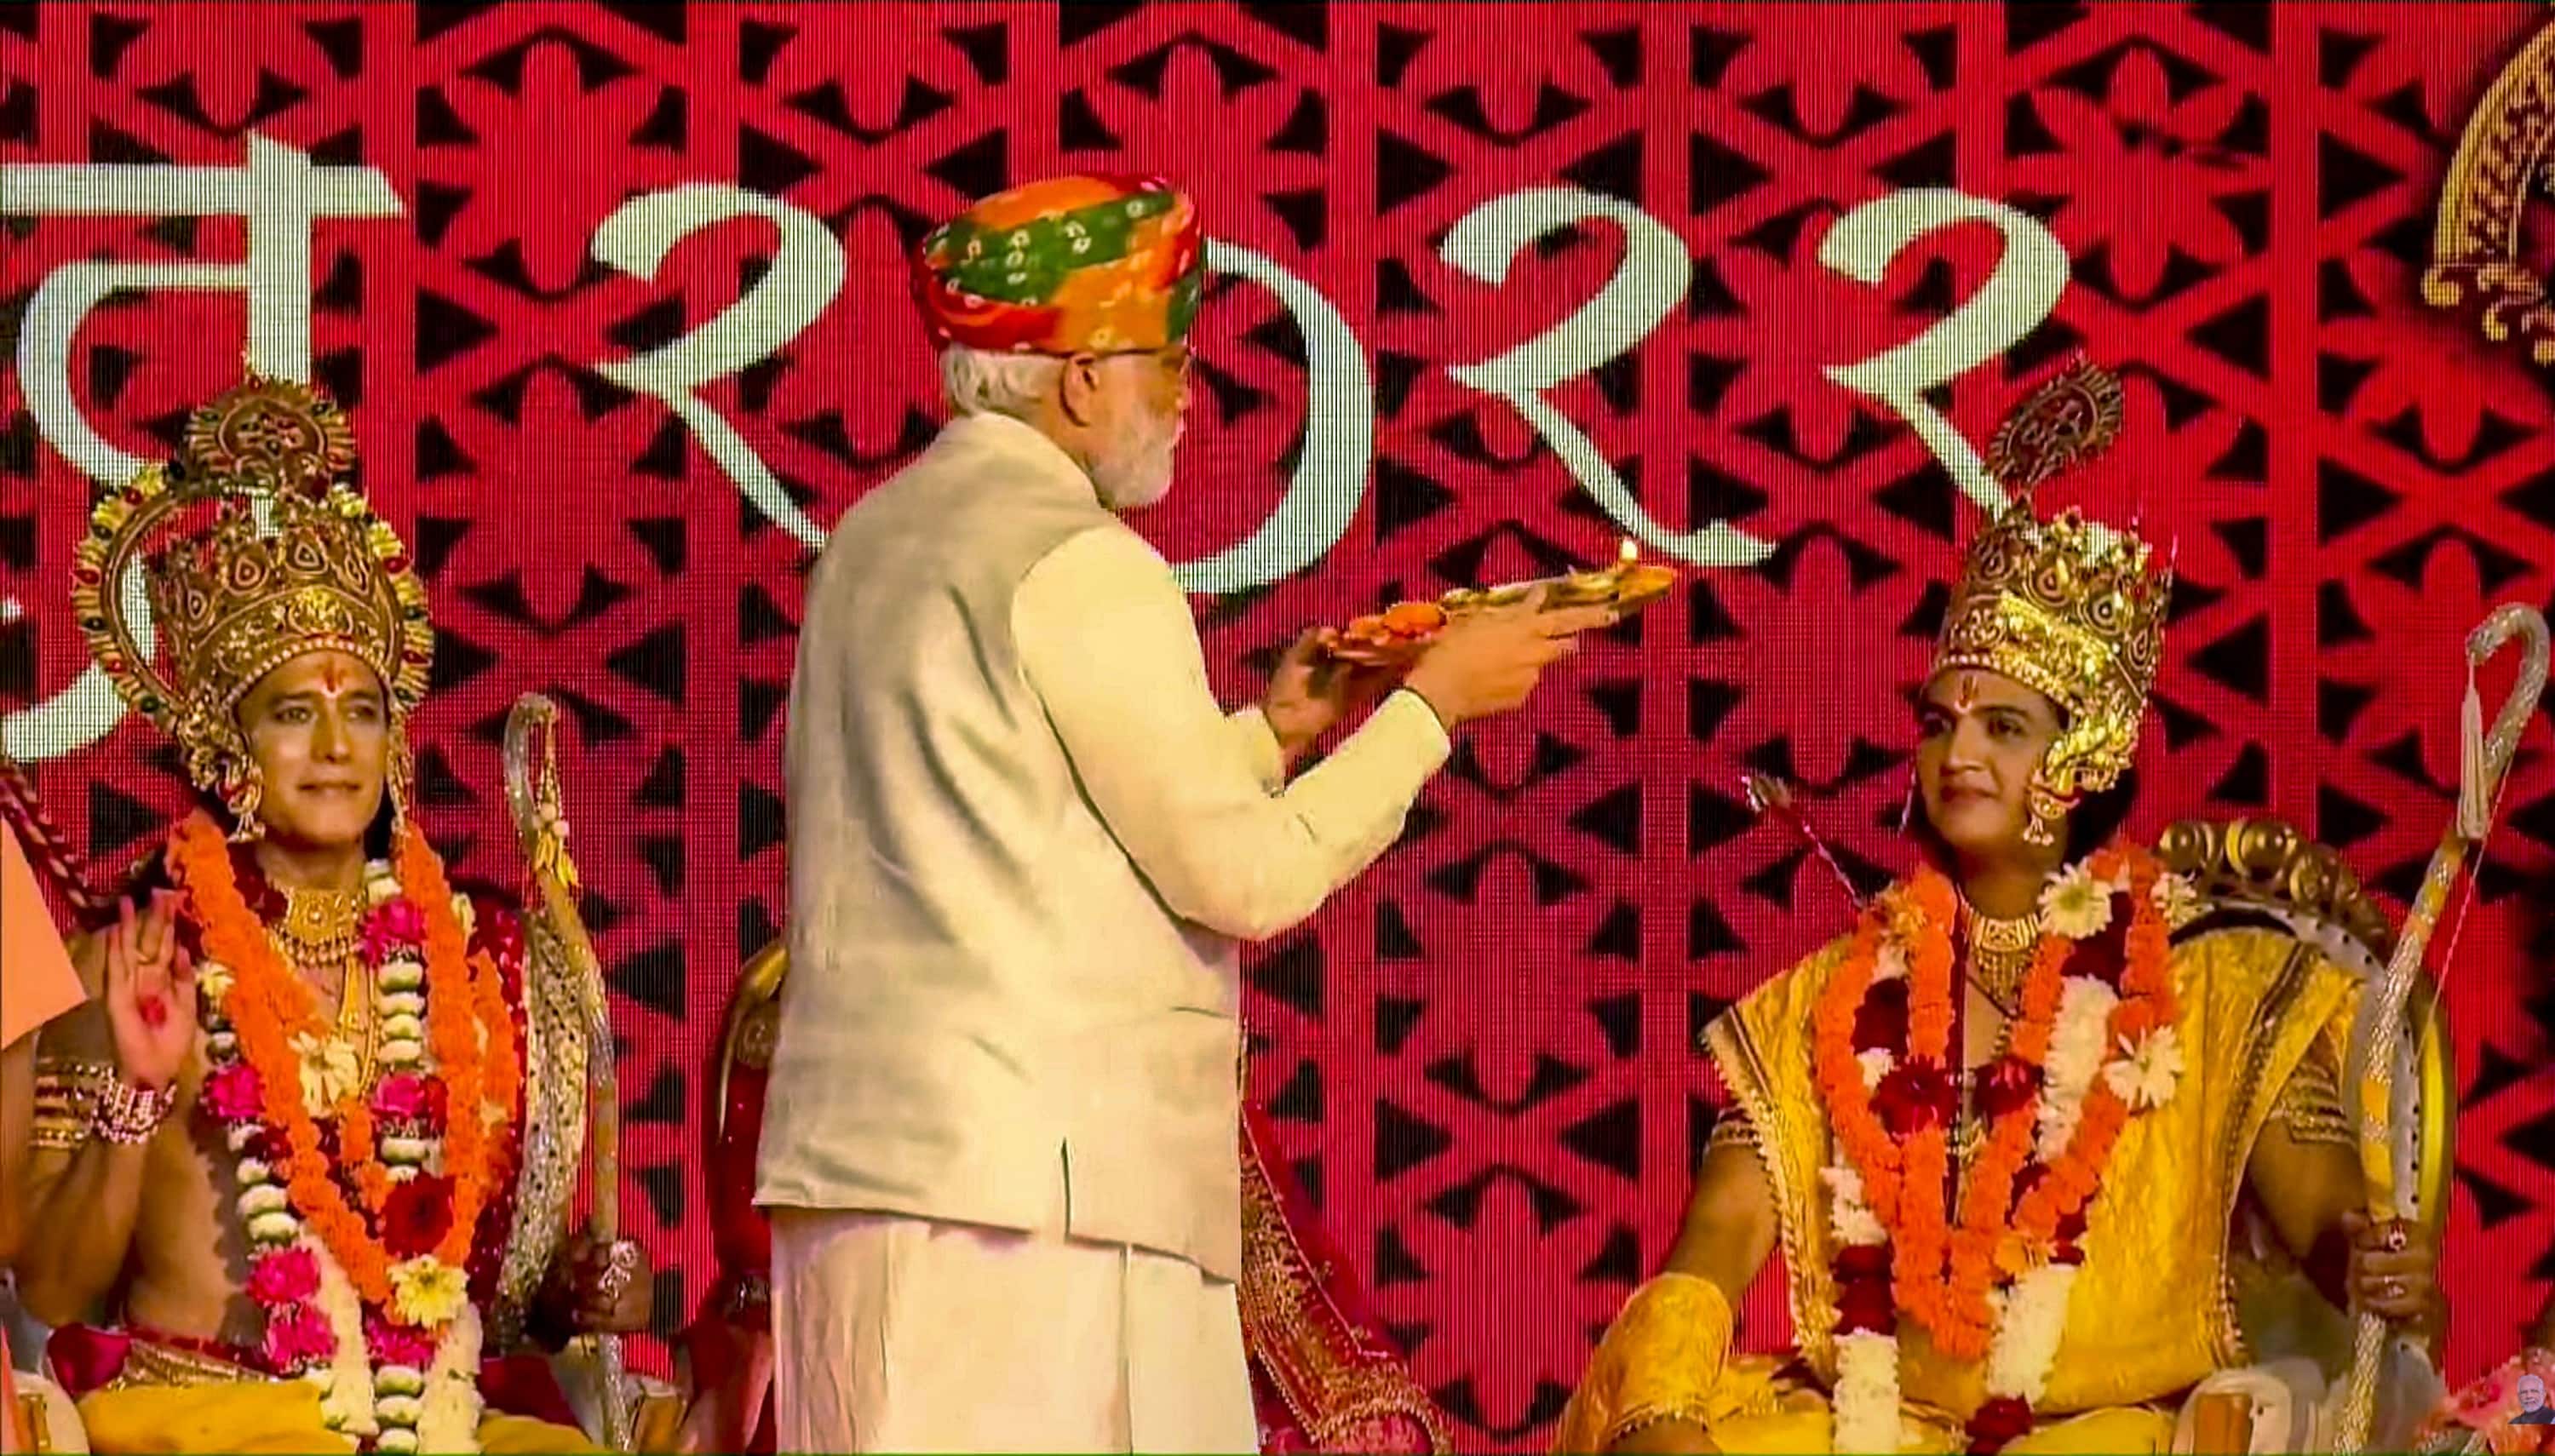 PM Modi does symoblic Rajyabhishek of Bhagwan Shree Ram in Ayodhya